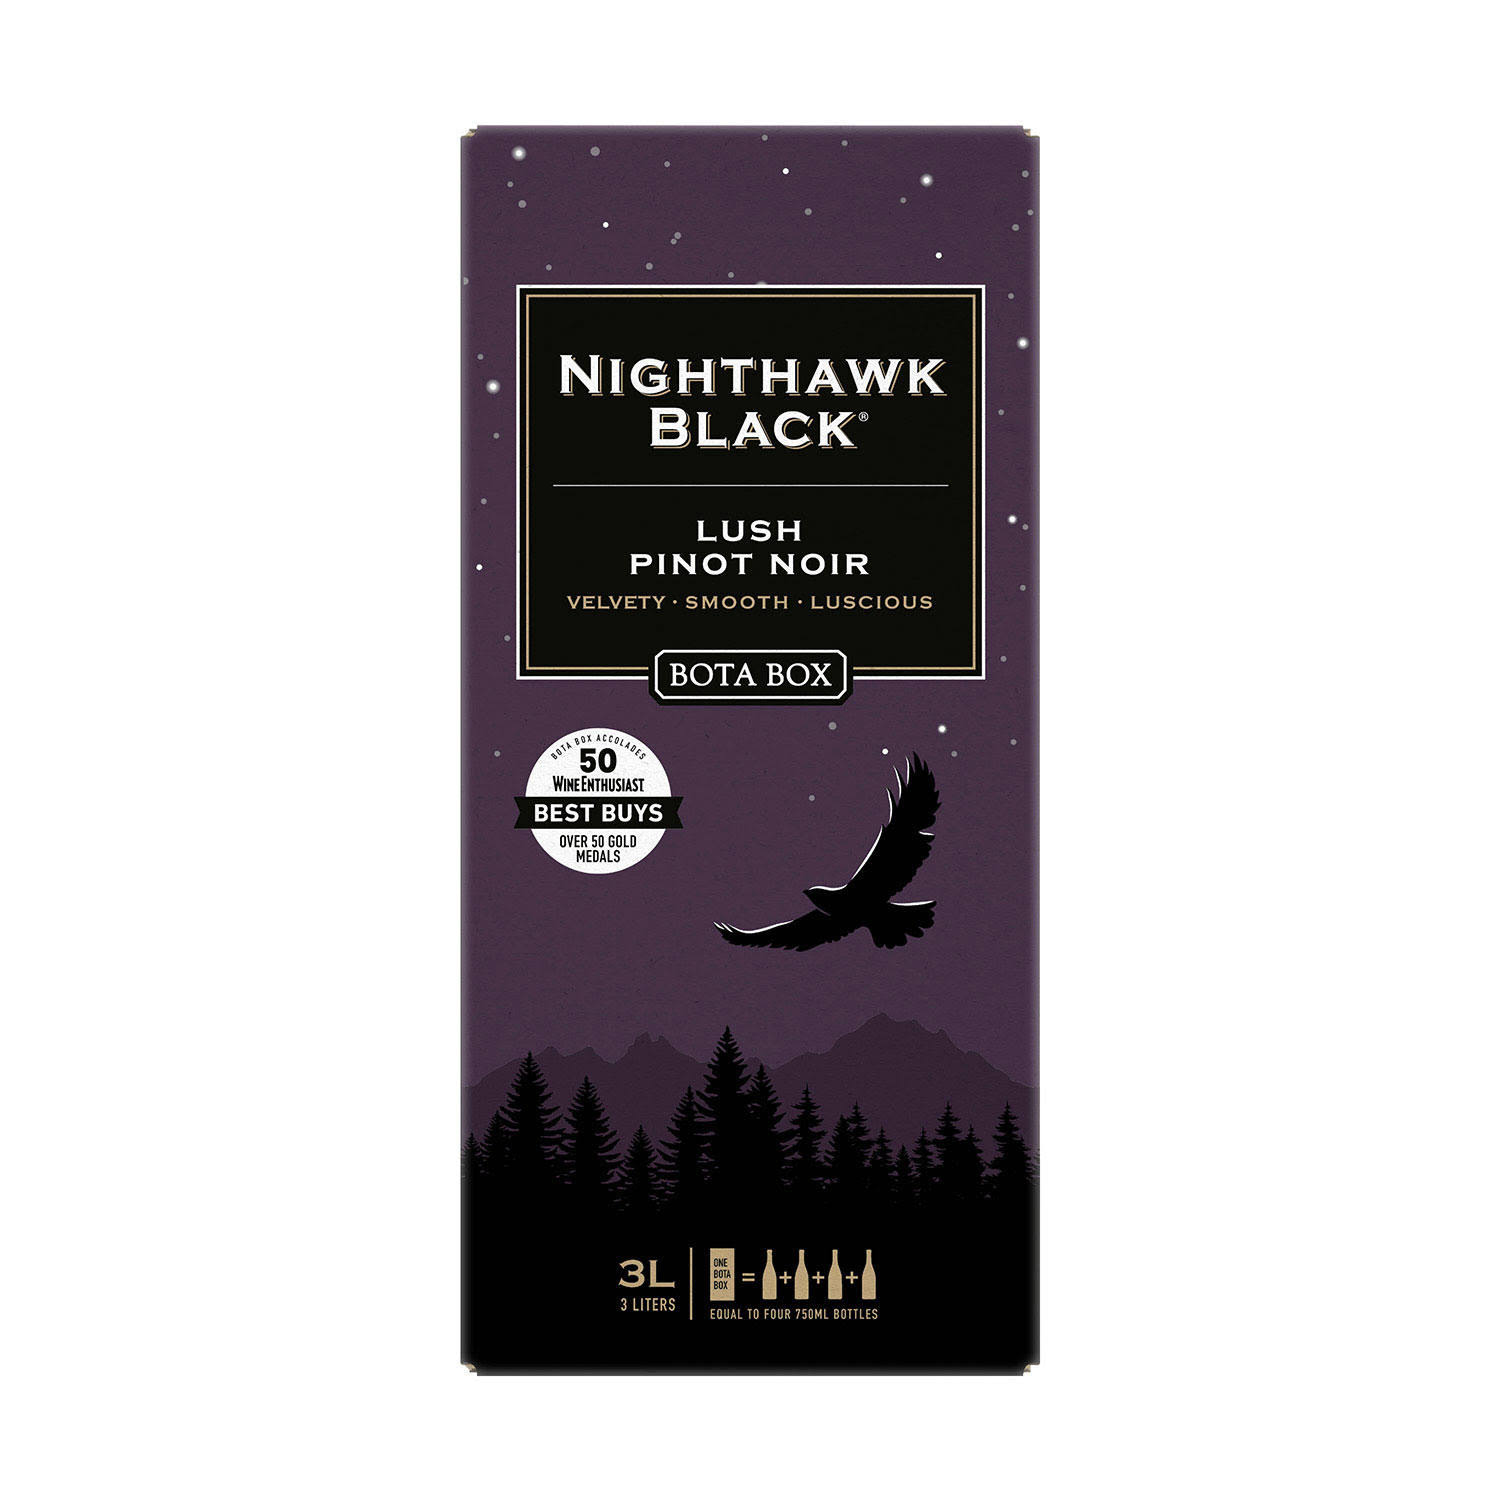 Bota Box Nighthawk Black Pinot Noir, Lush - 3 liters